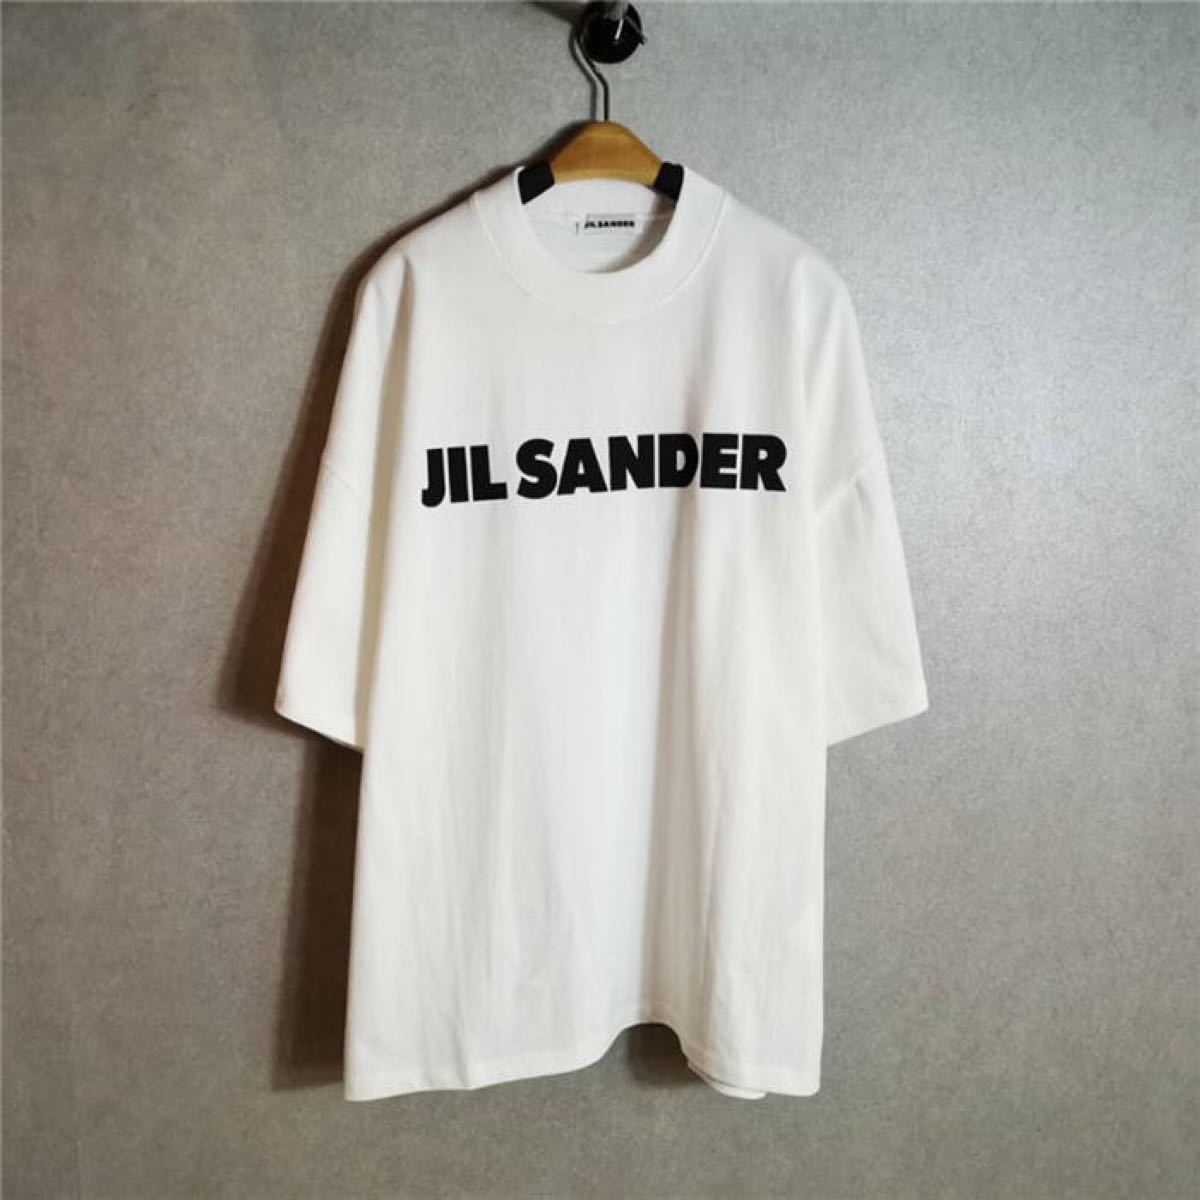 JIL SANDER ( ジルサンダー )  Tee 半袖Tシャツ